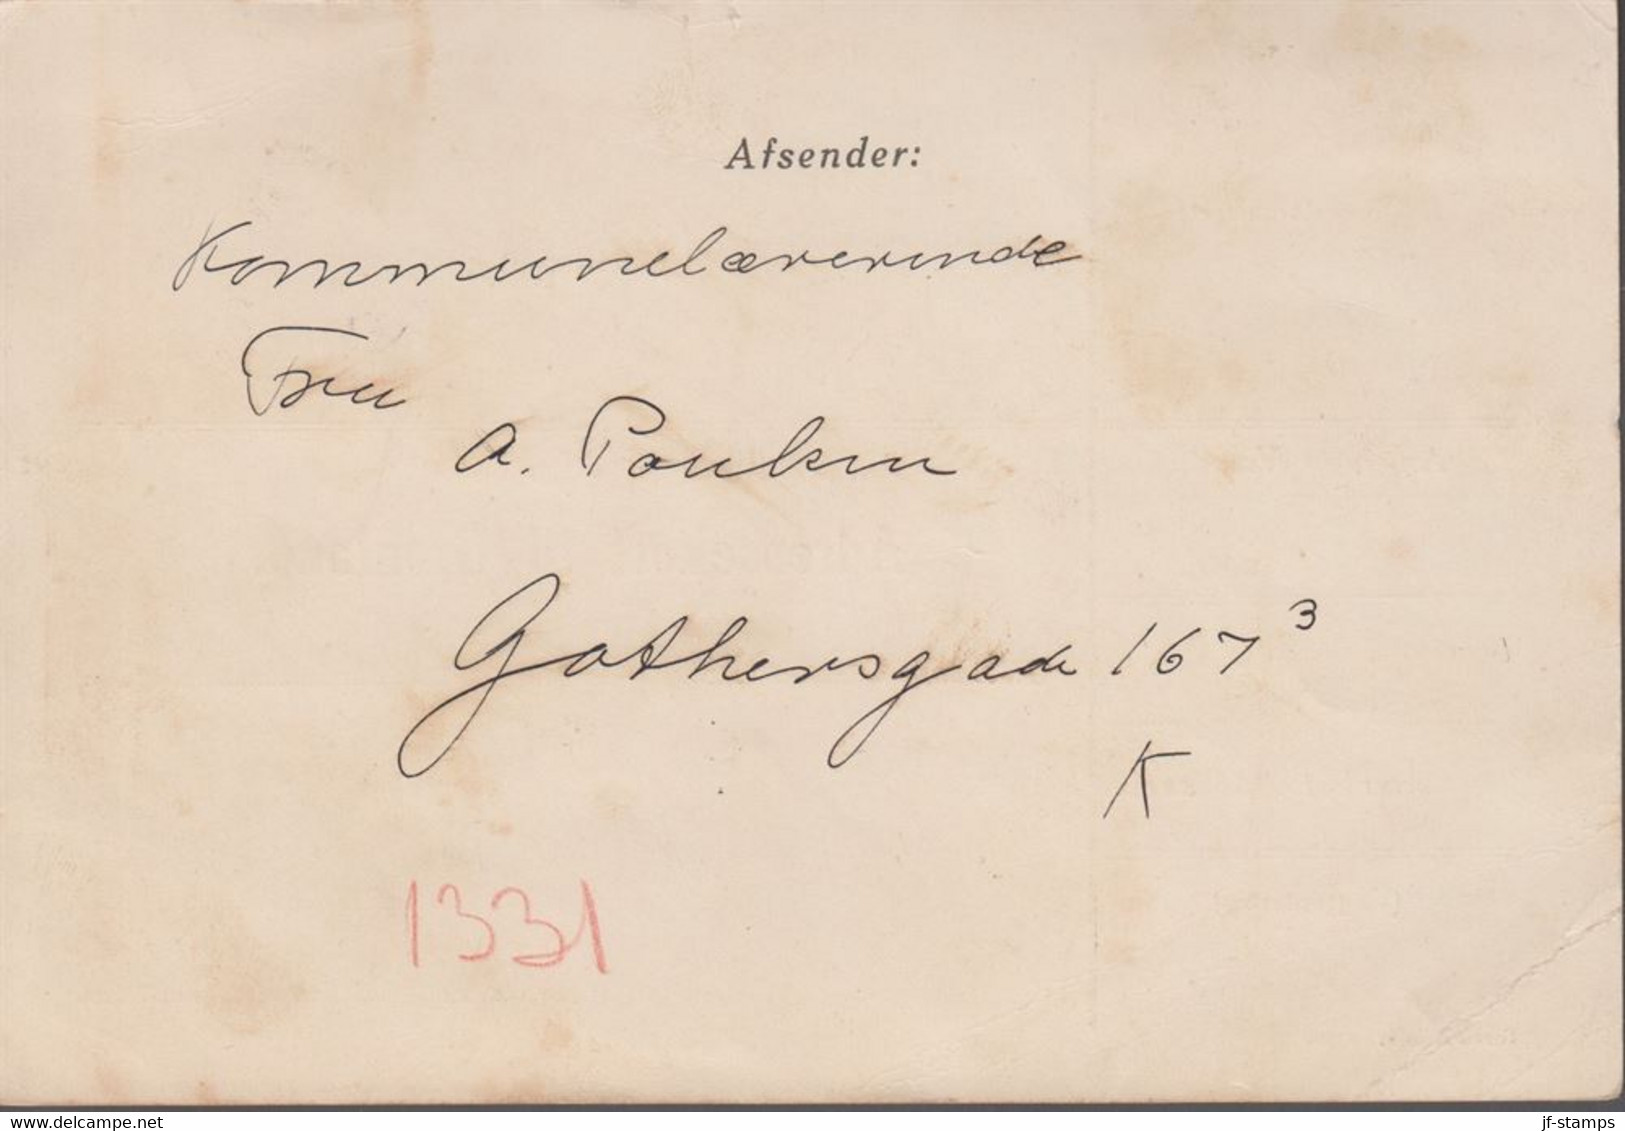 1930. 1 Kr. Yellow And 1915 10 øre Blue. Thiele Letterpress. Perf. 11 ½. On Adresseko... (Michel 11A+) - JF419617 - Spoorwegzegels